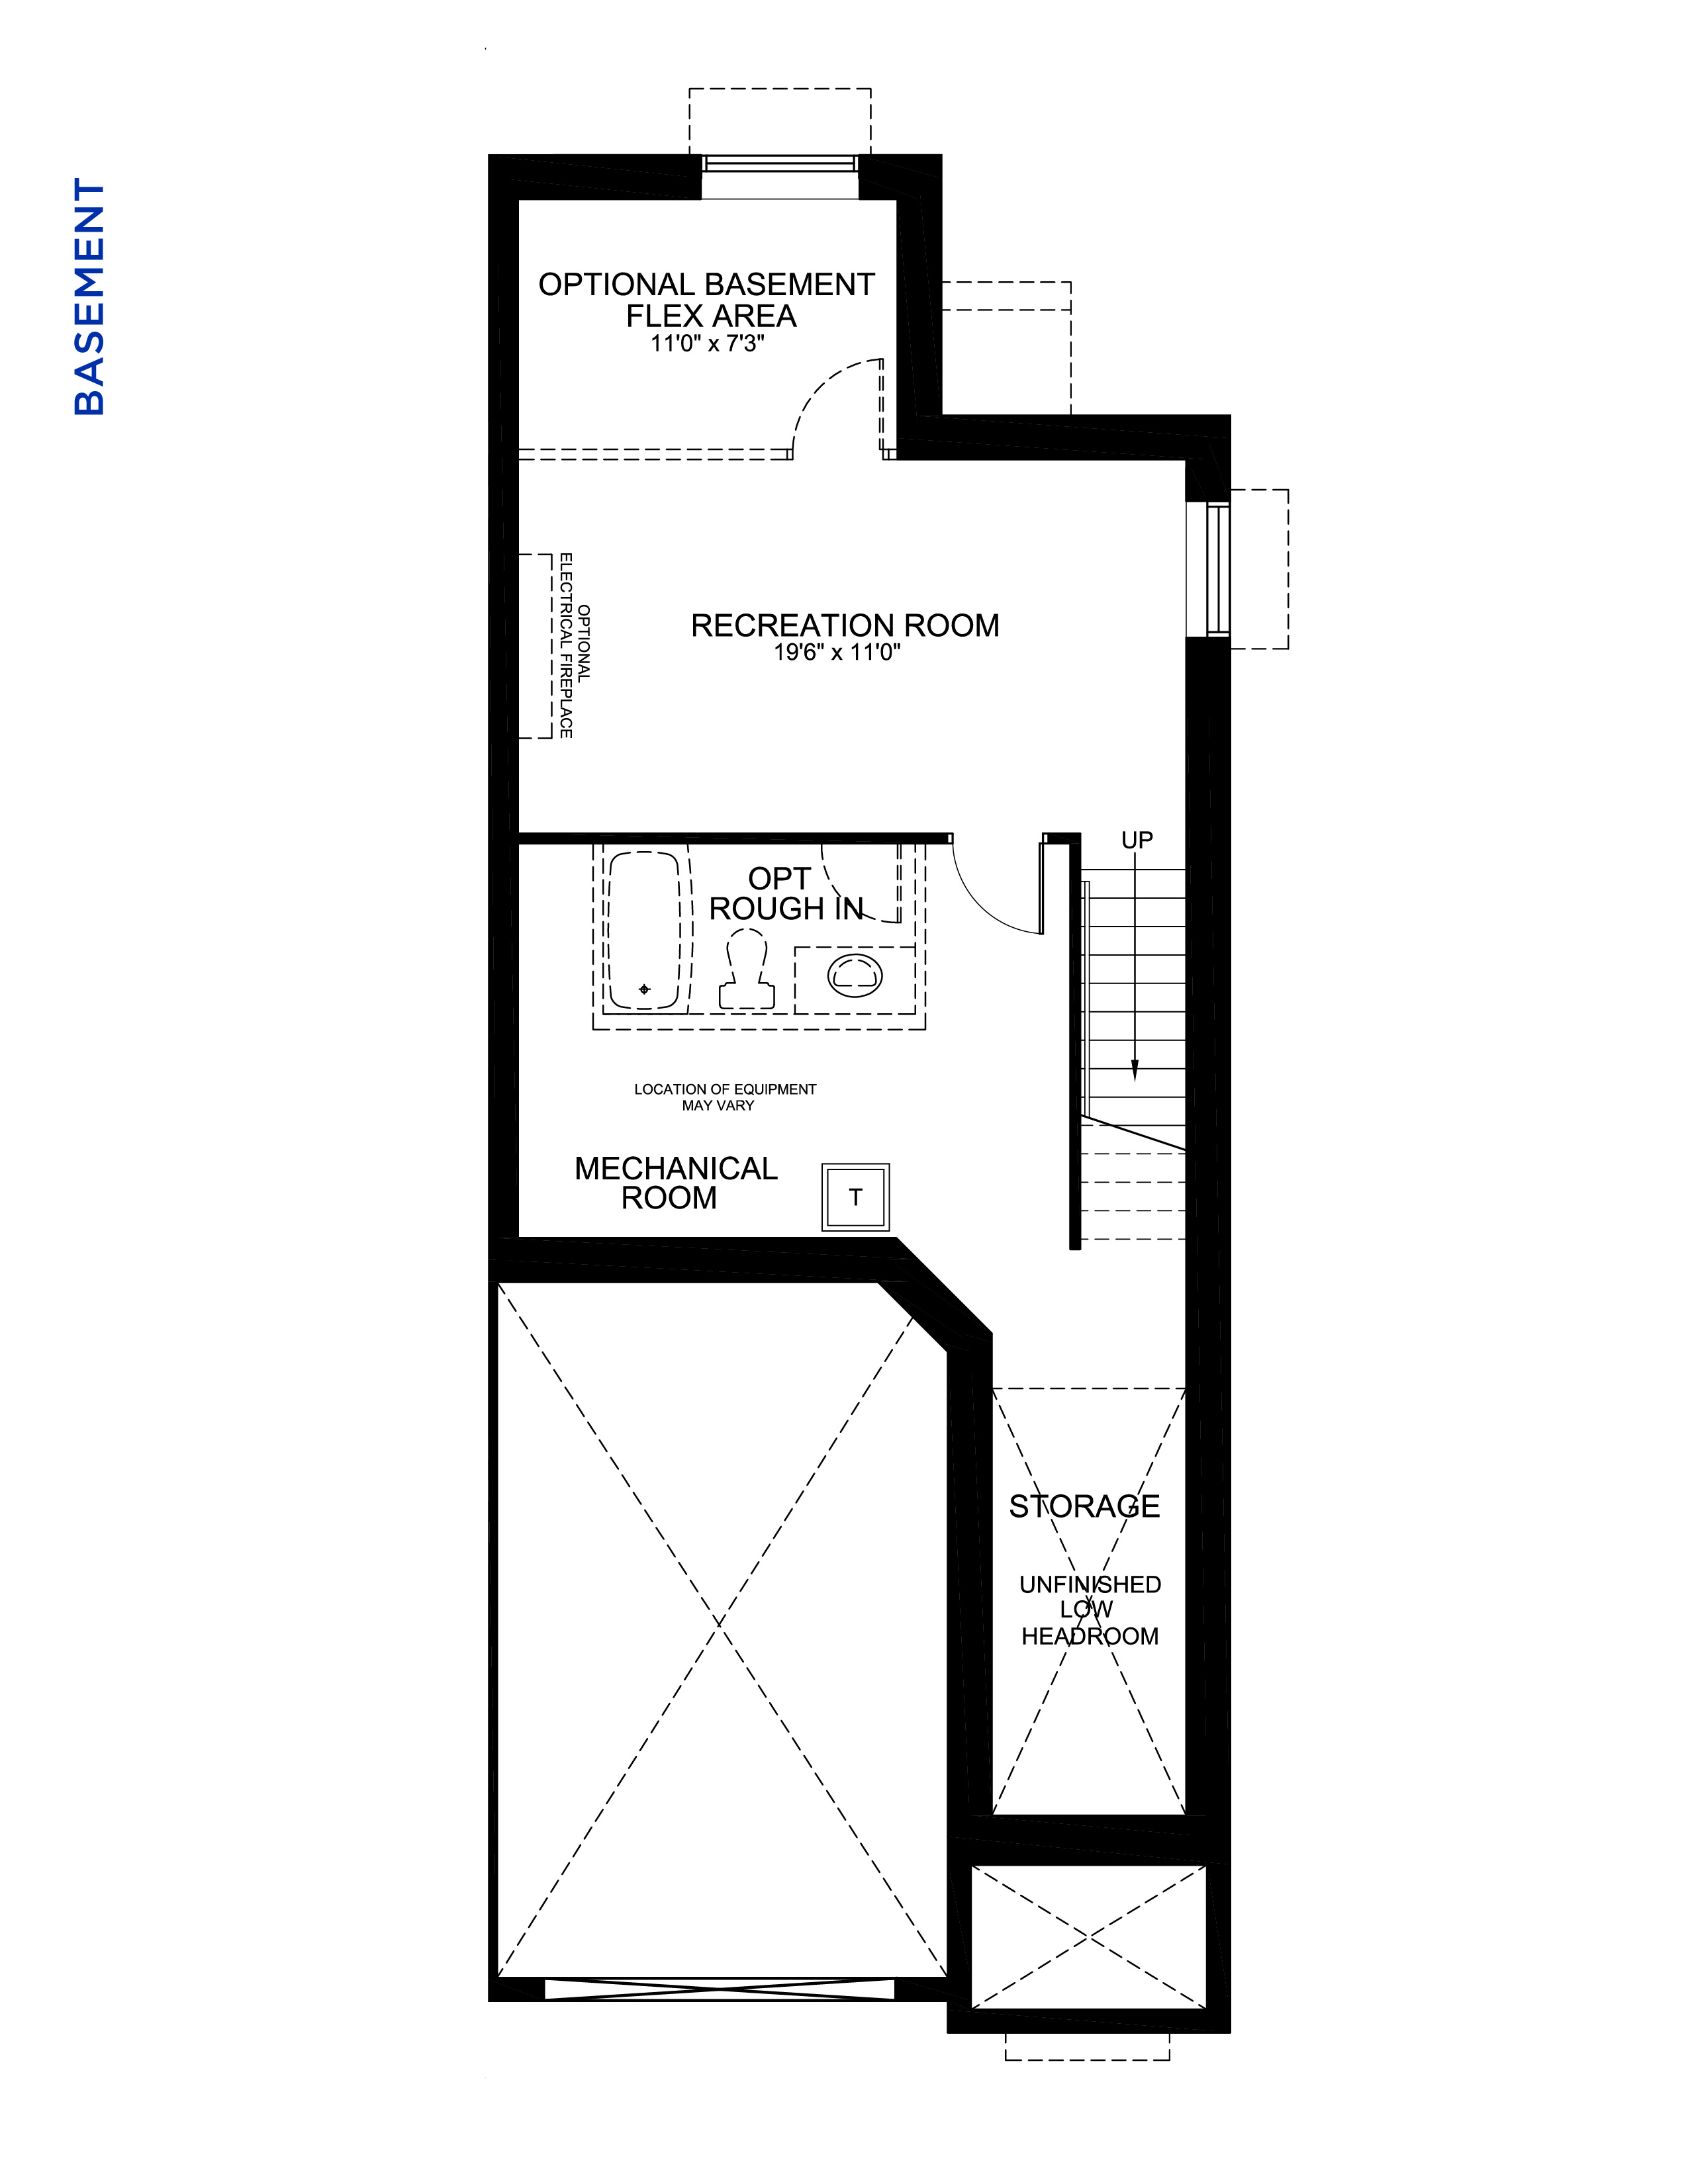 Floorplan Basement Level - Fern